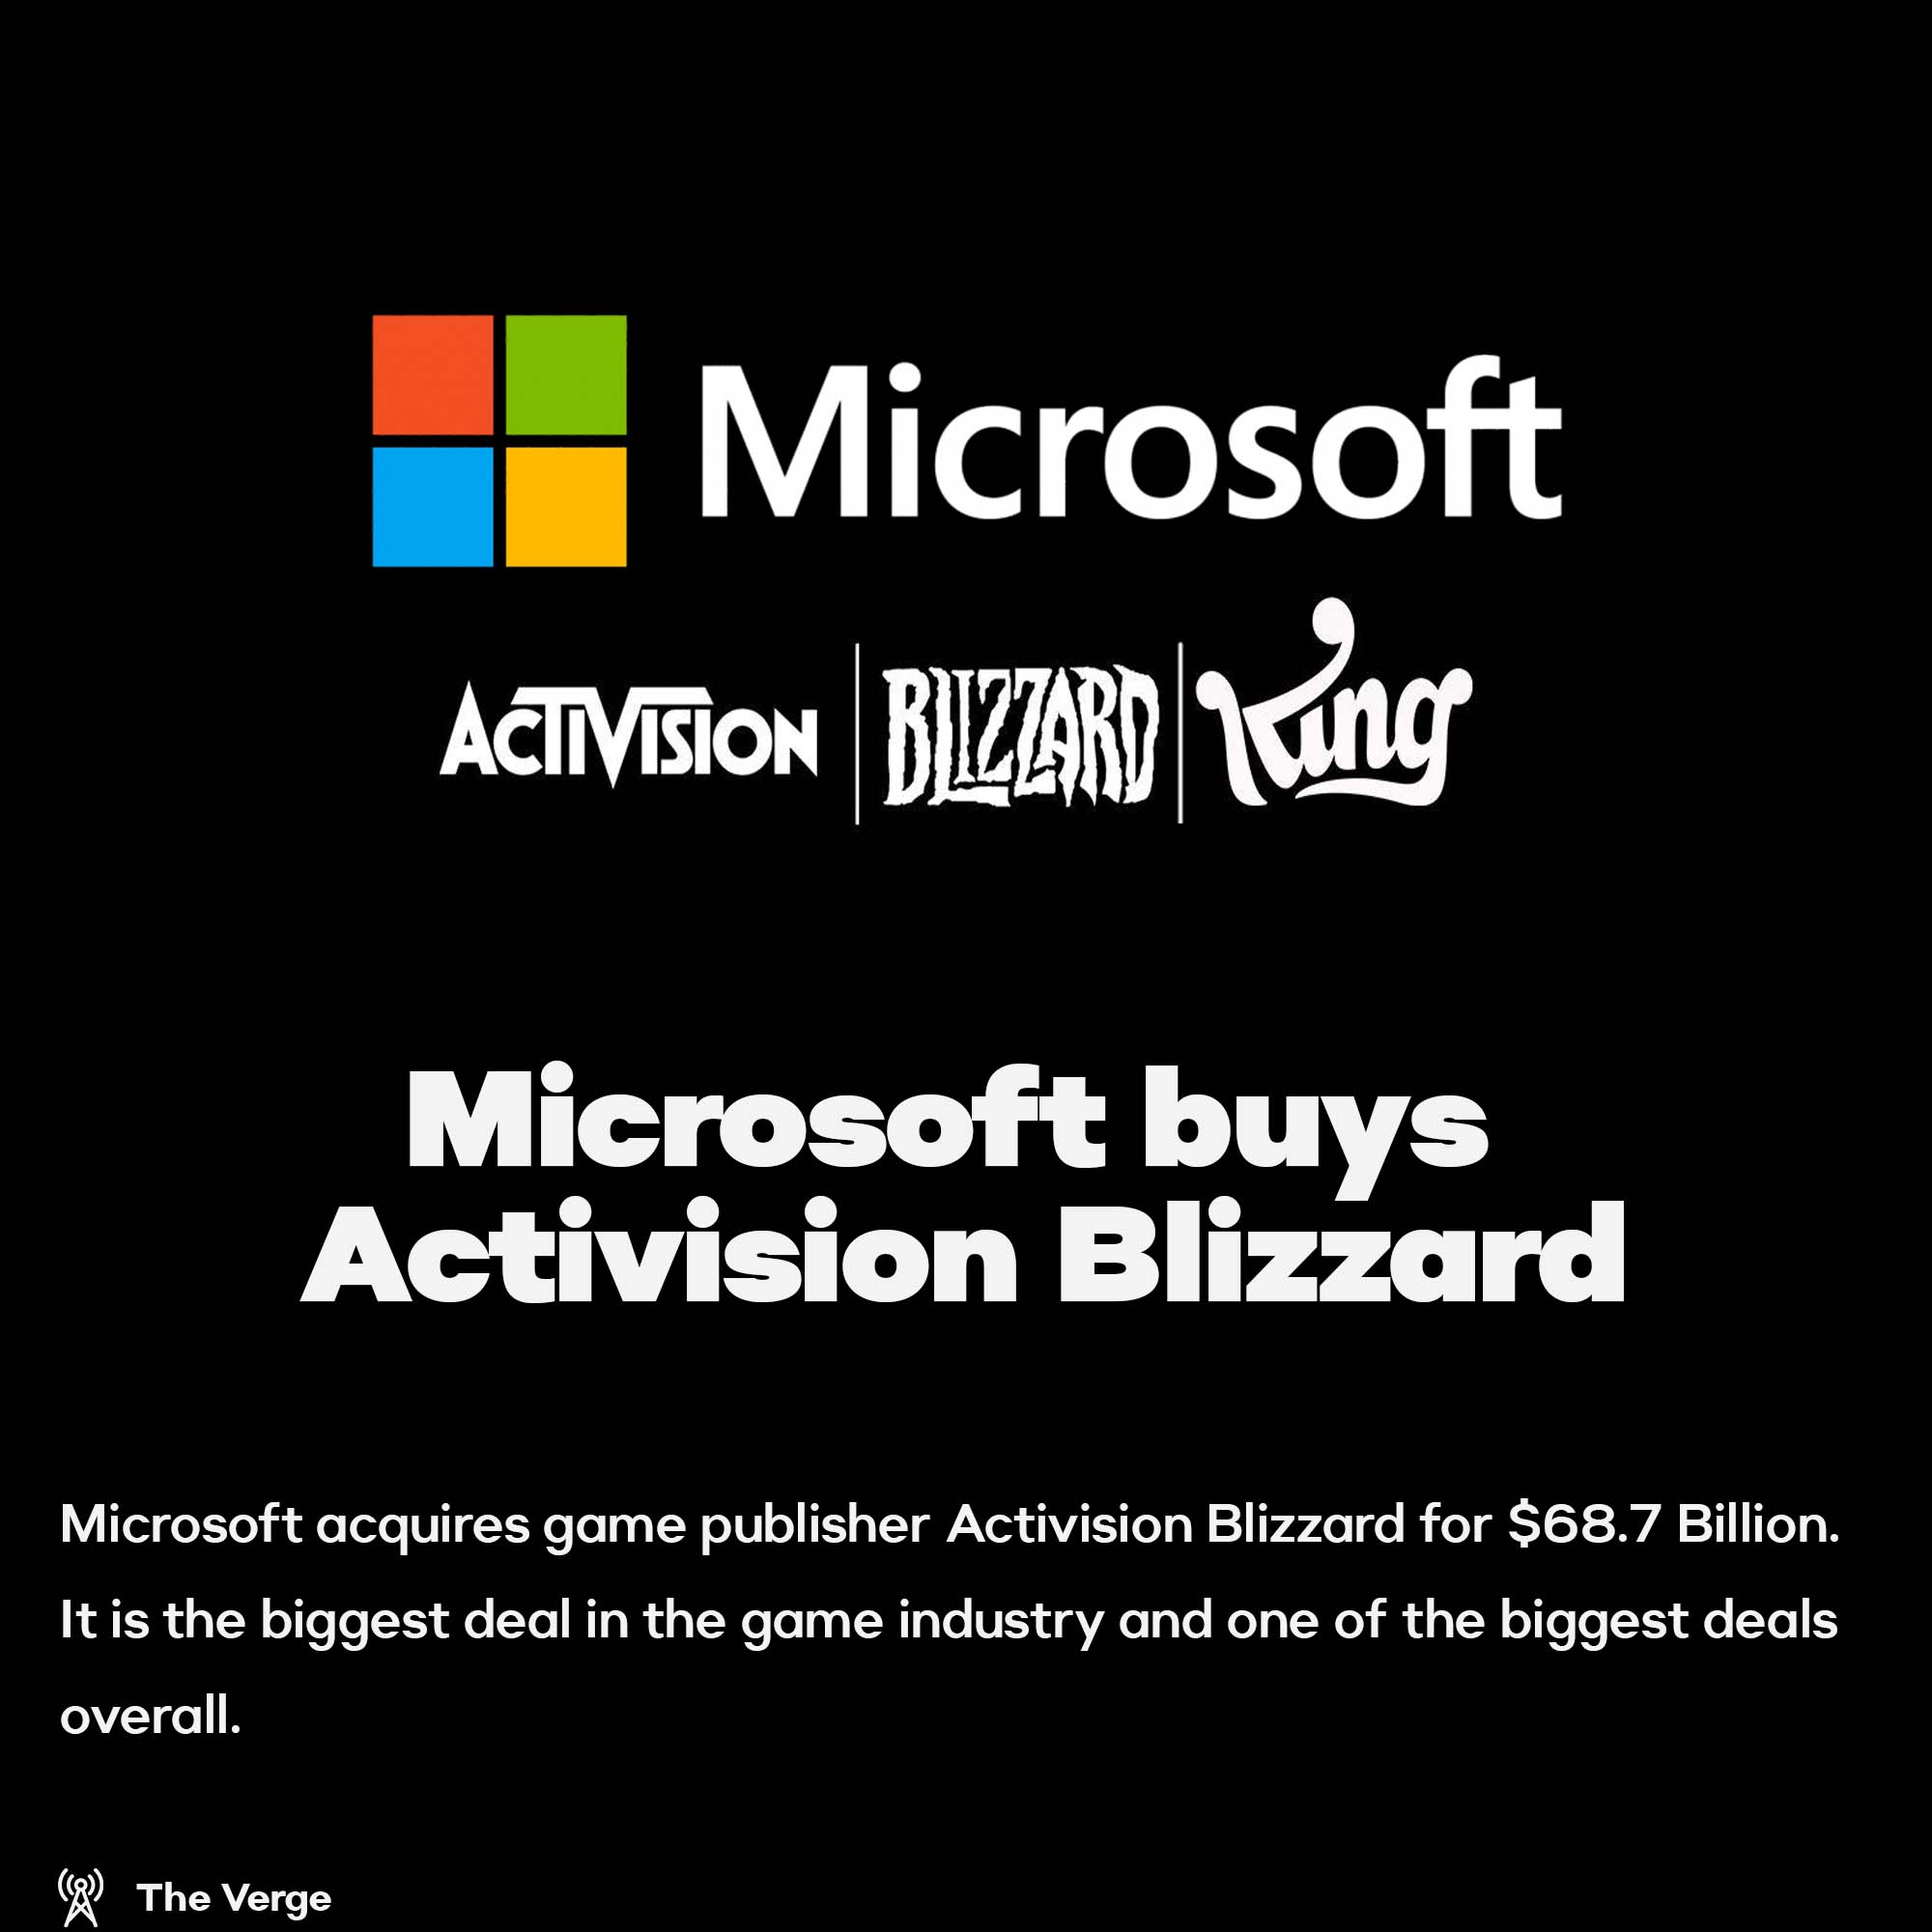 Microsoft acquires Activision Blizzard